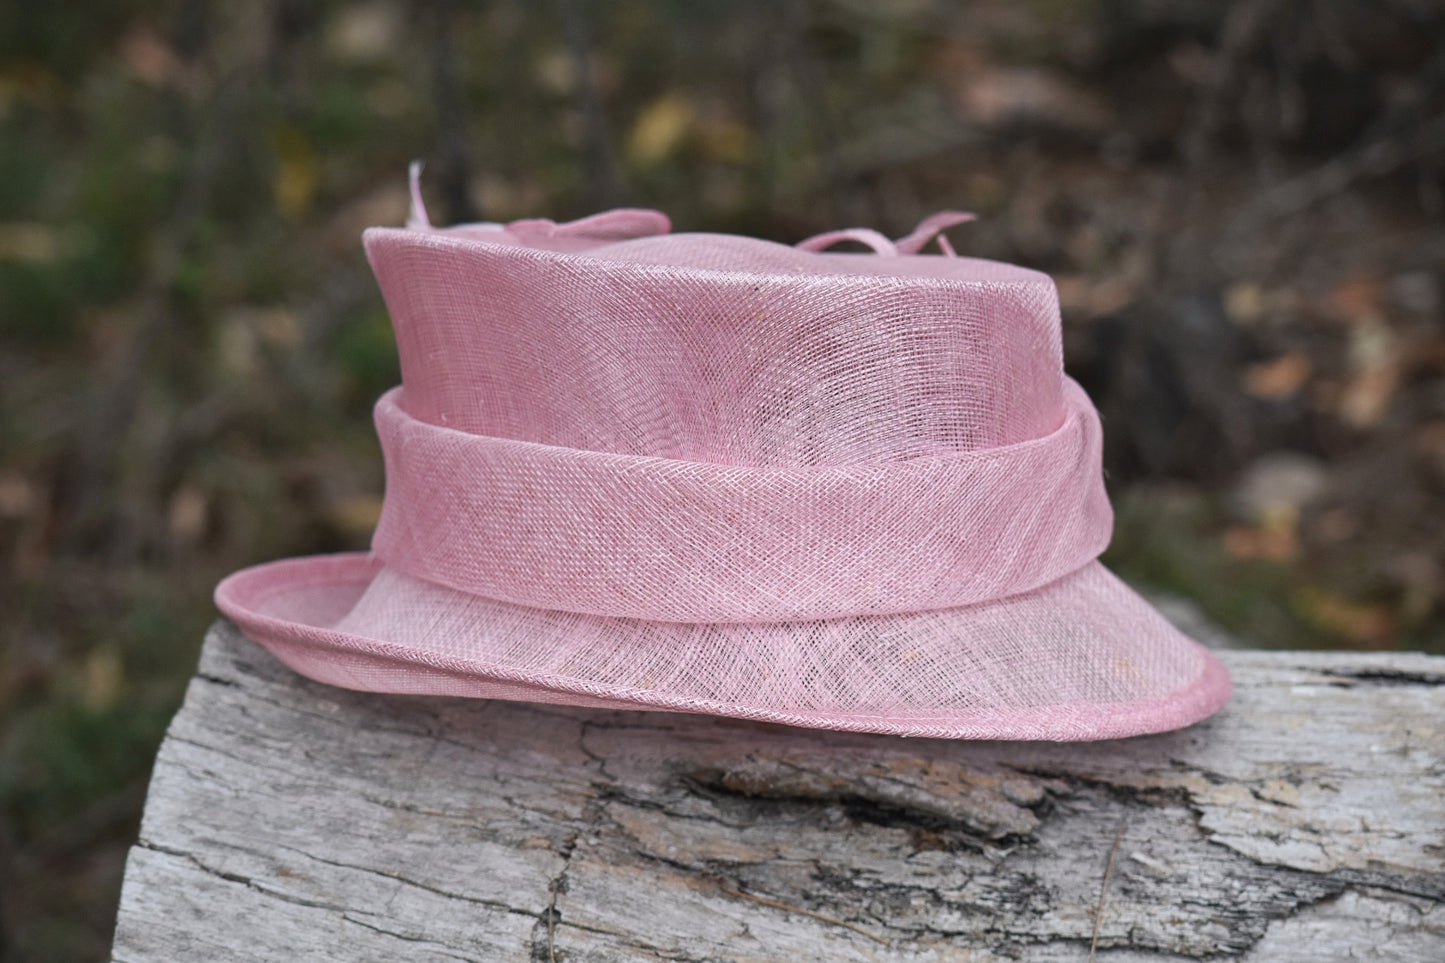 Pink Sinamay Horse Showing Hat